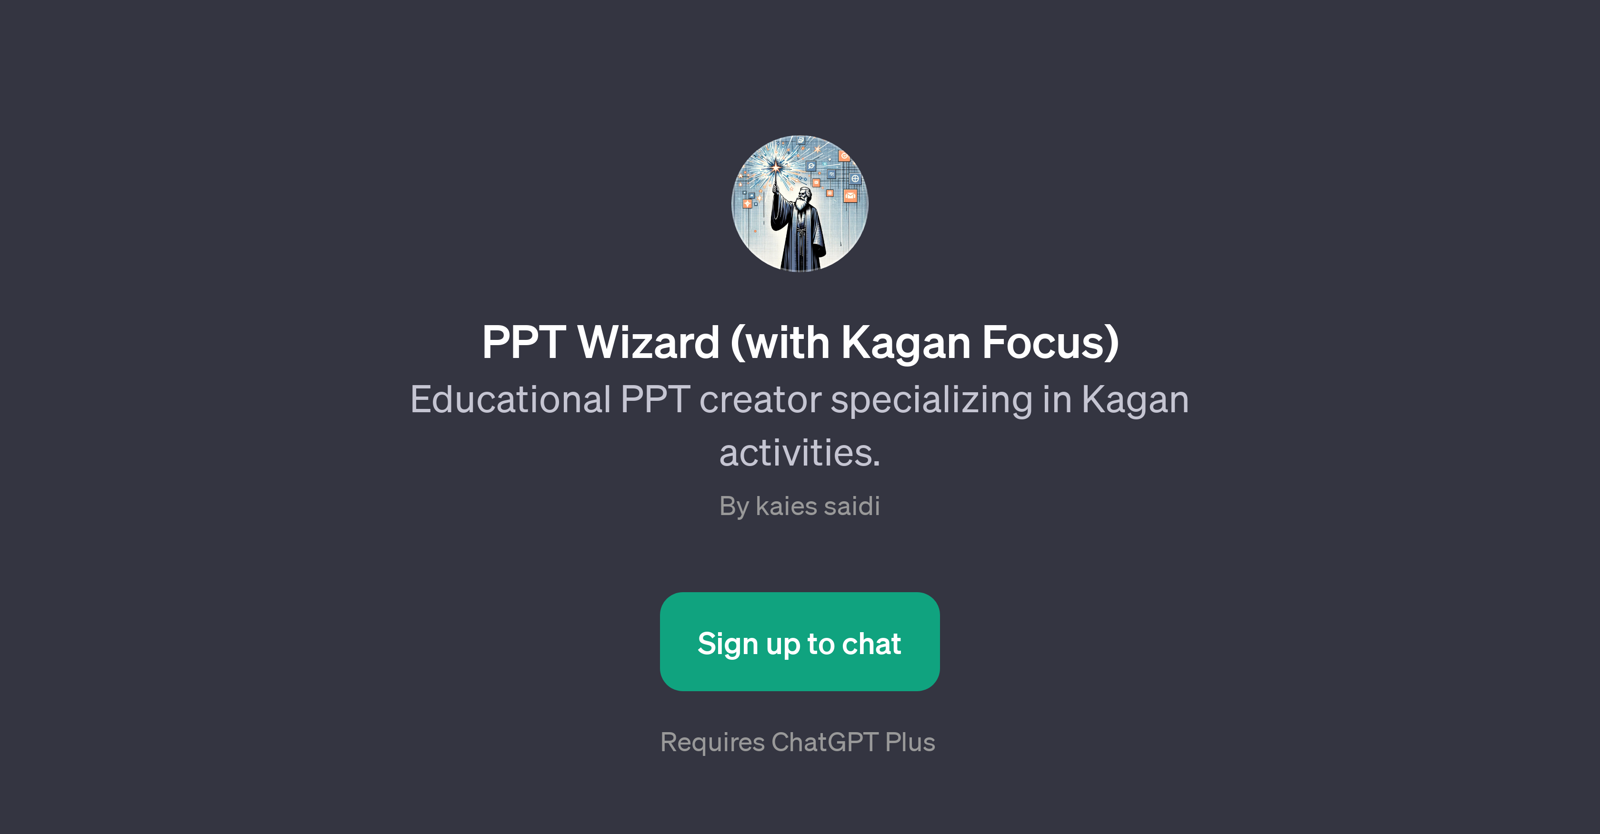 PPT Wizard (with Kagan Focus) website